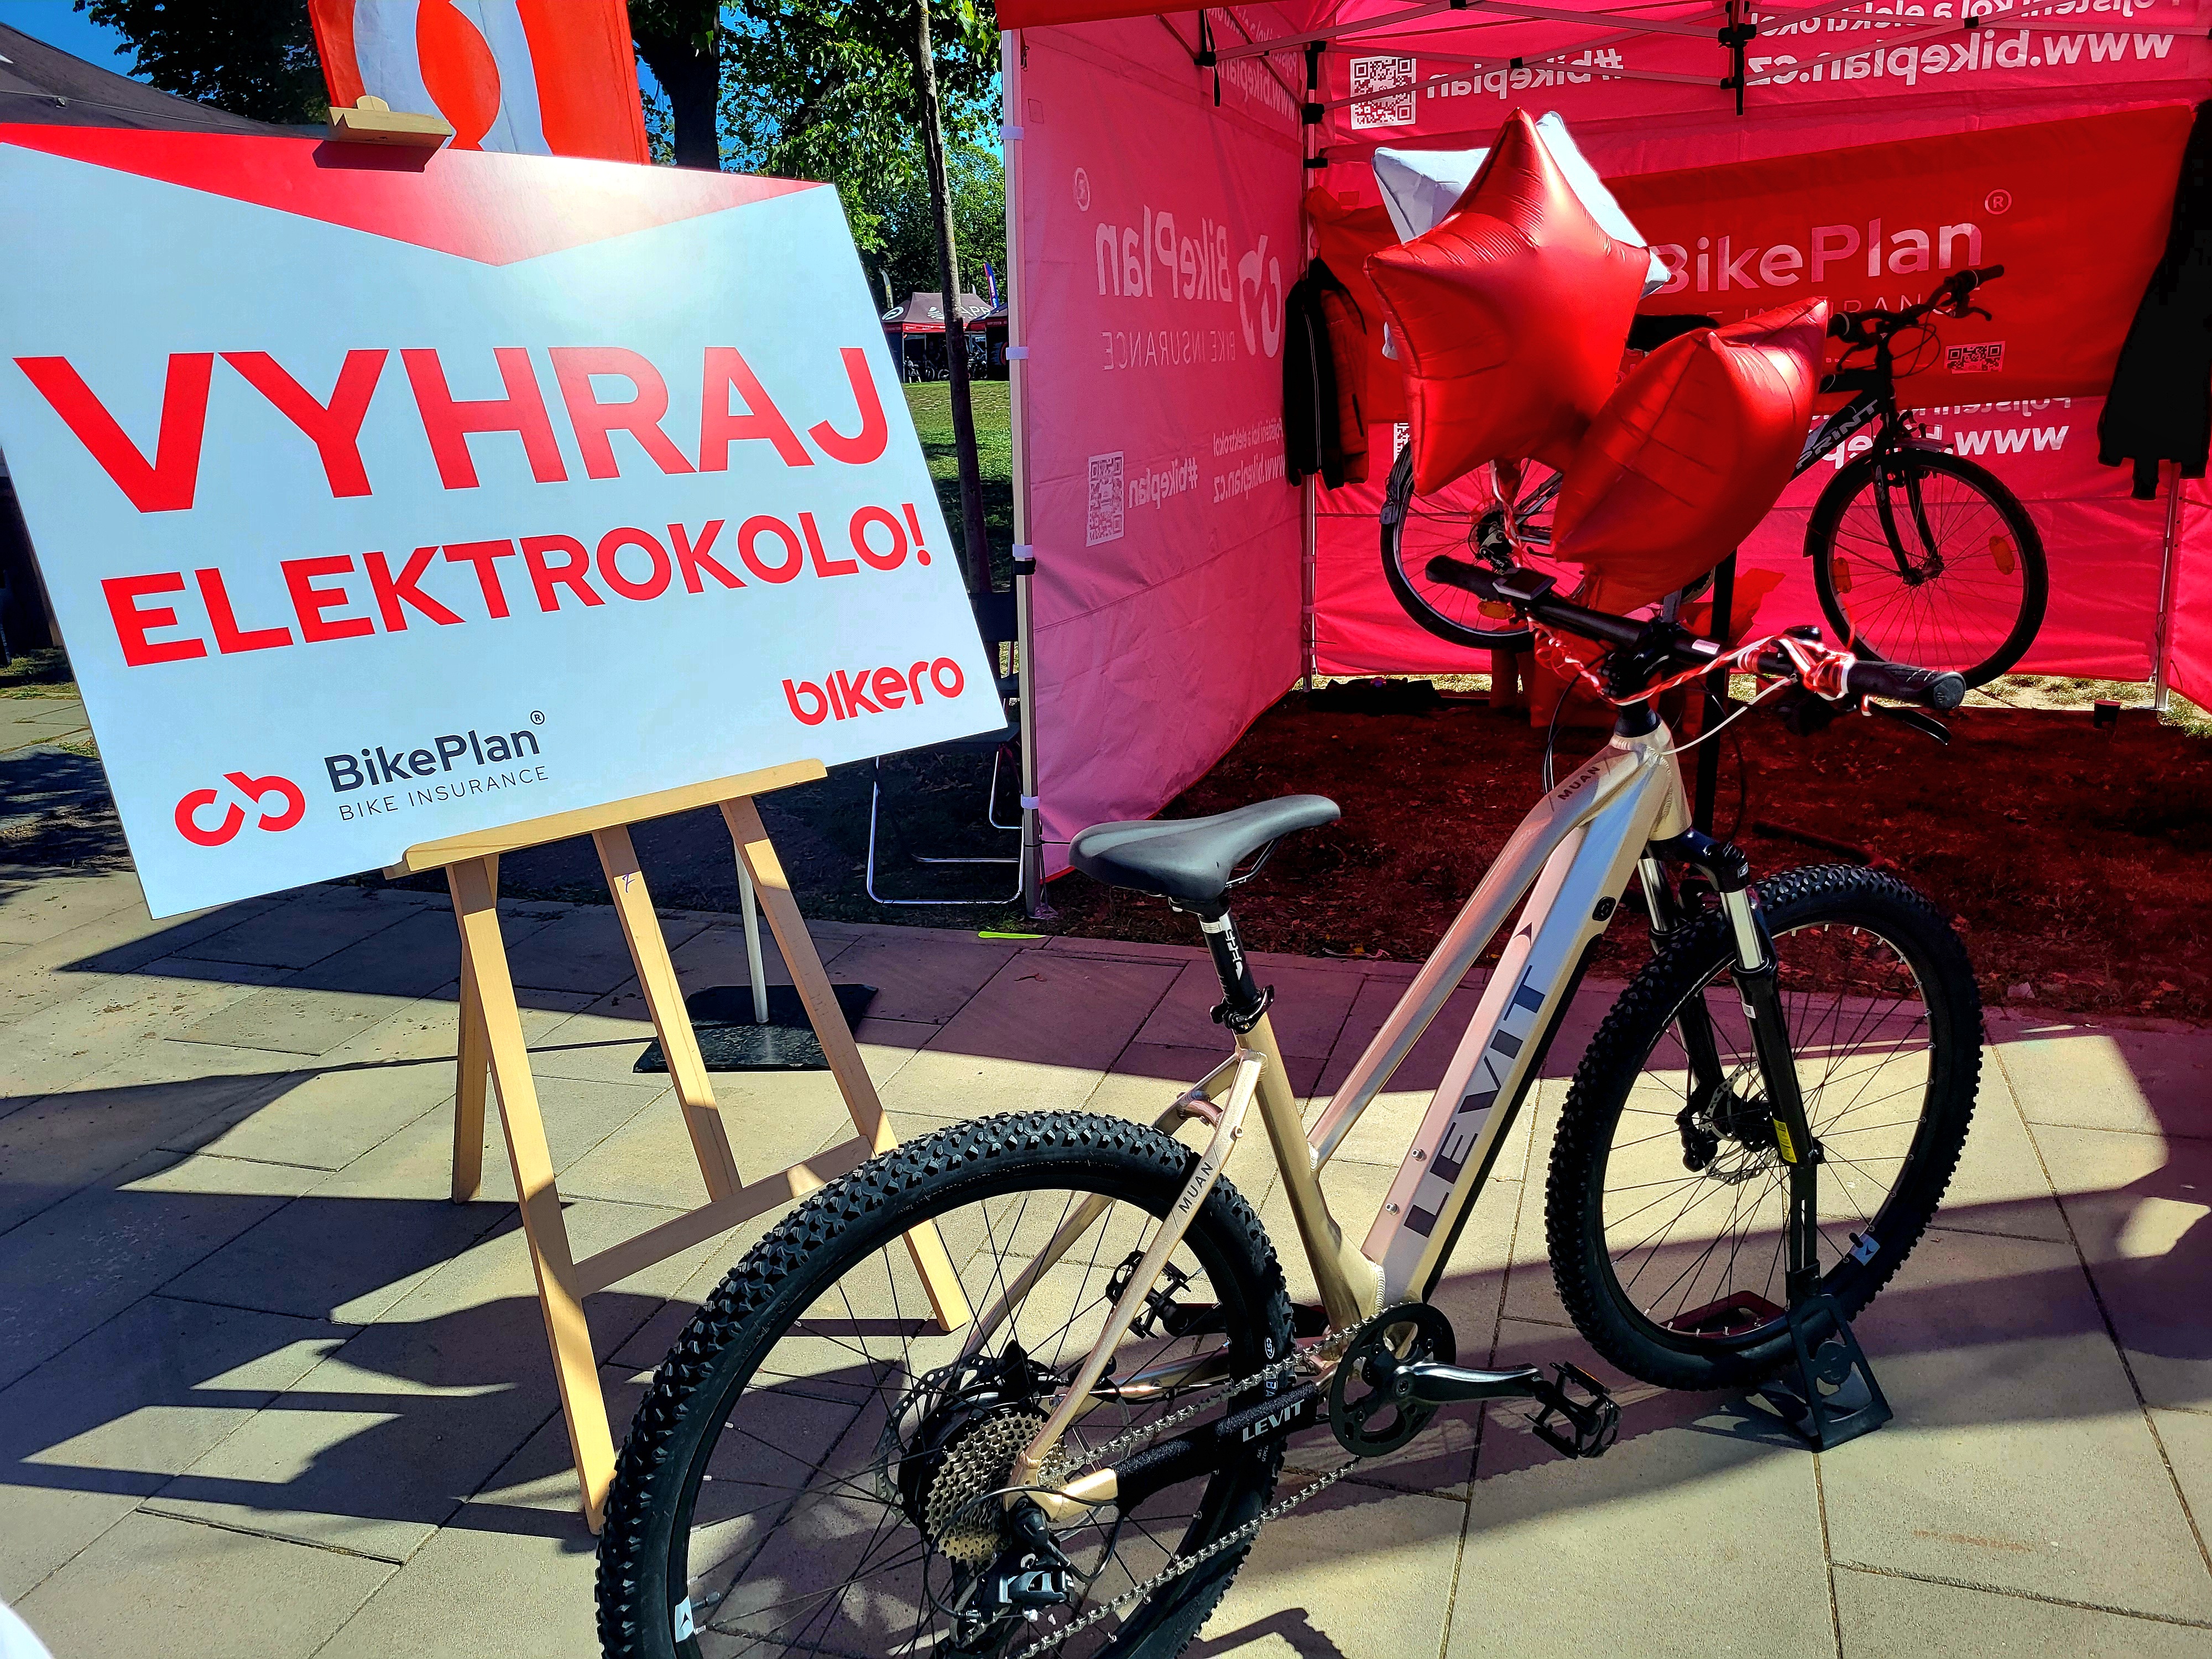 BikePlan.cz ve spolupráci s Bikero.cz předali výhru z Prague Bike Festivalu - elektrokolo Levit!